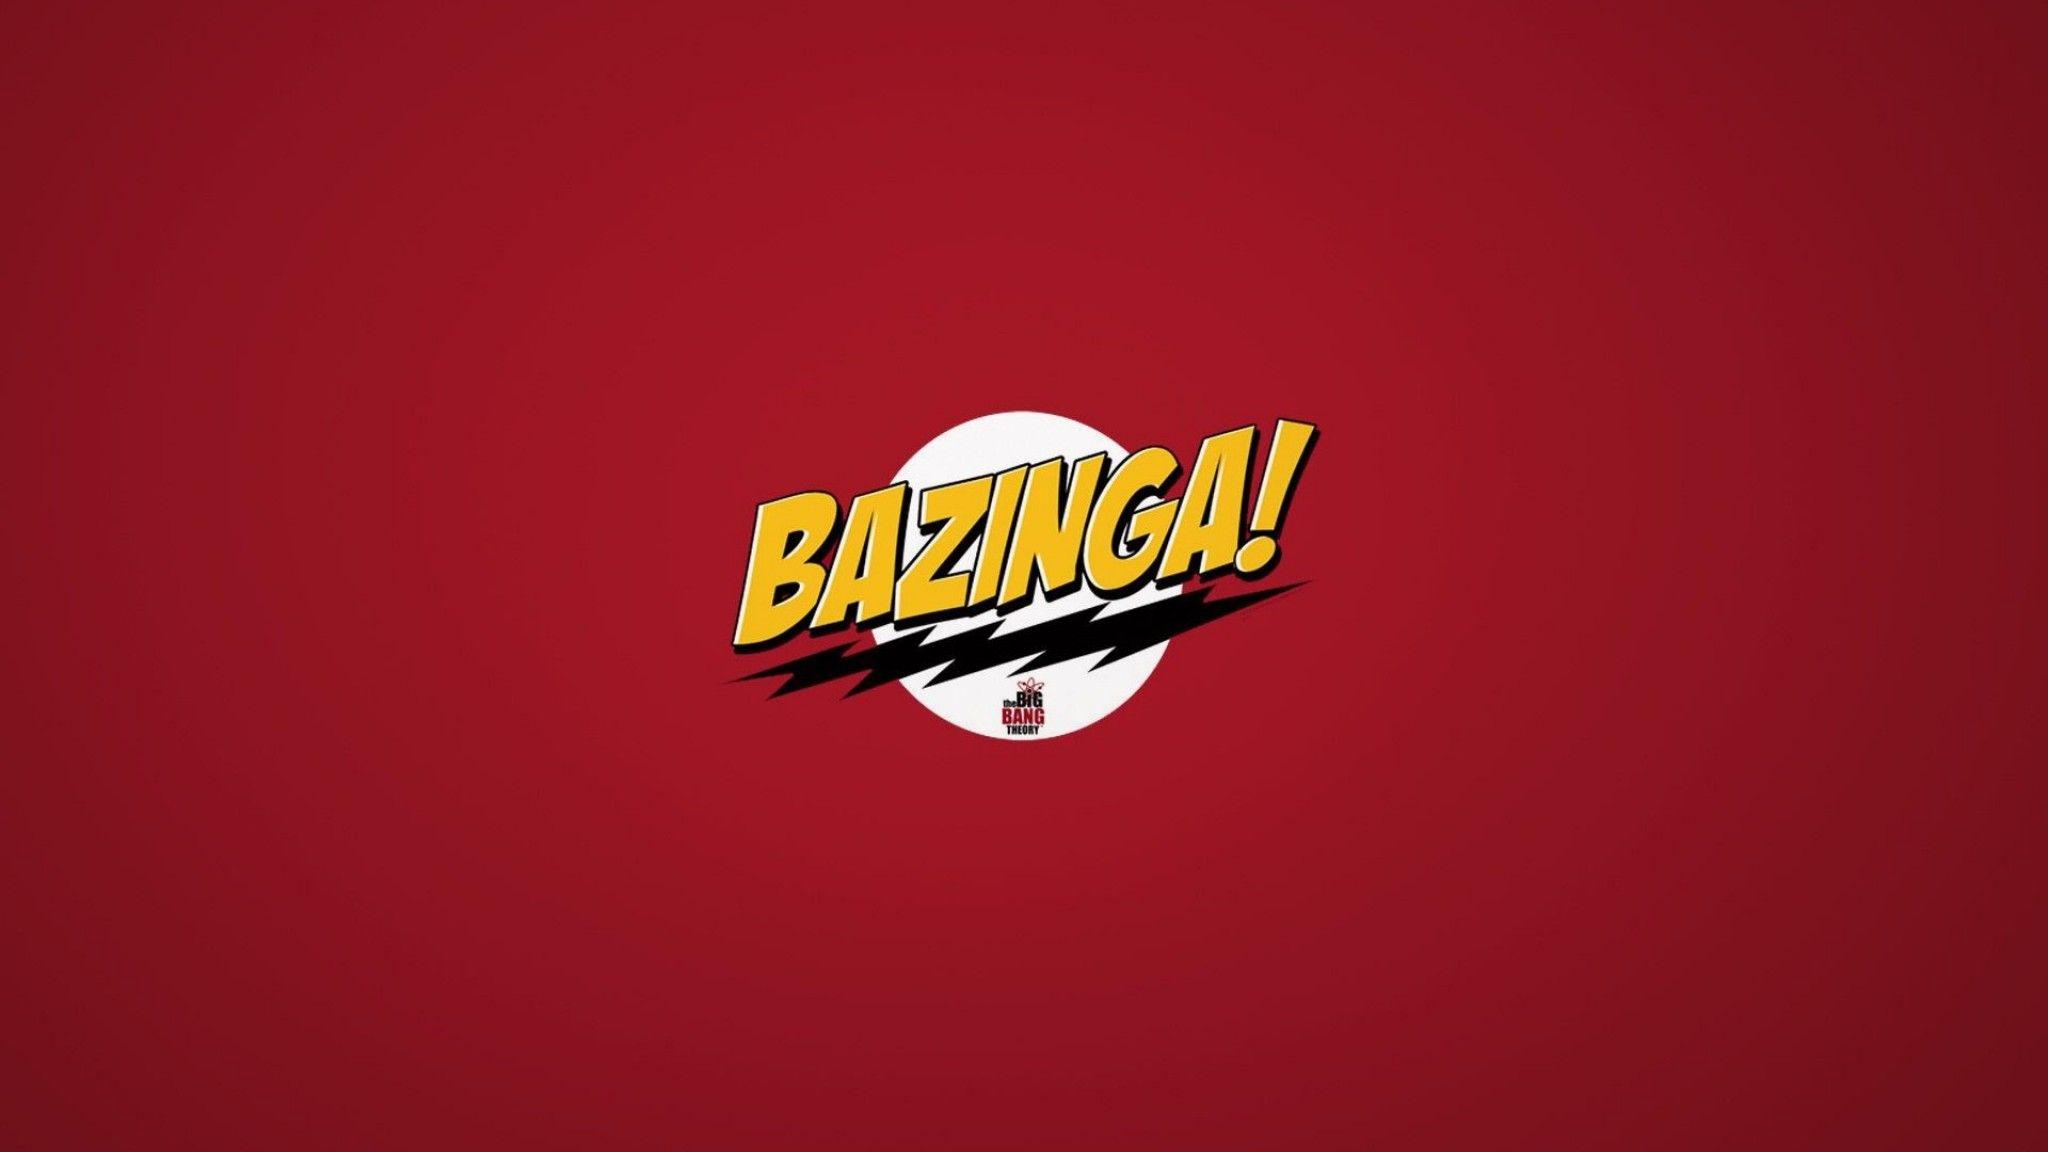 The Big Bang Theory immagini Bazinga! HD wallpaper and background